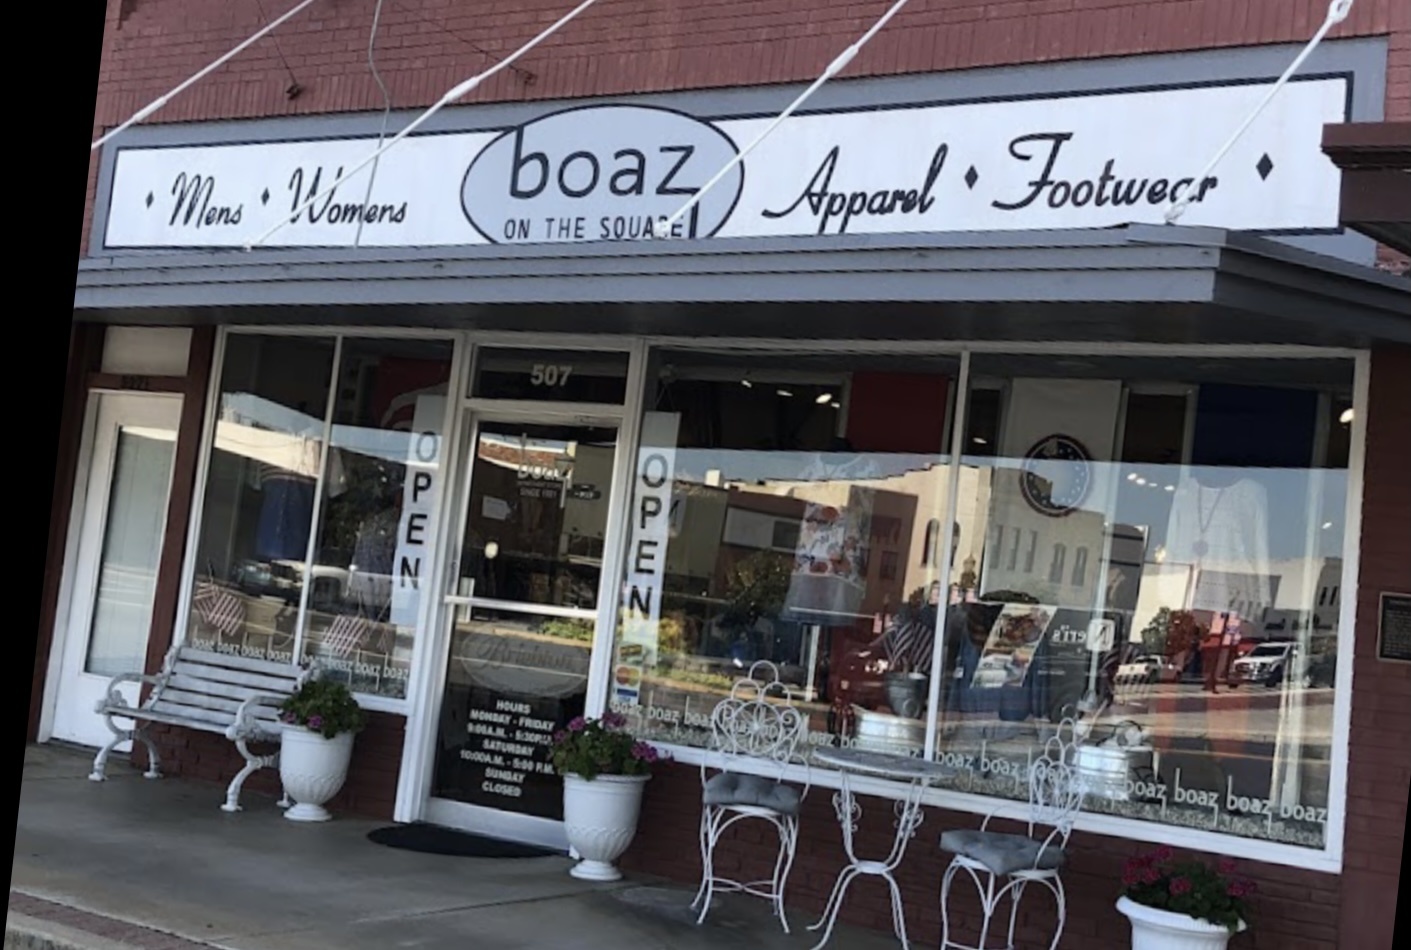 Boaz Department Store